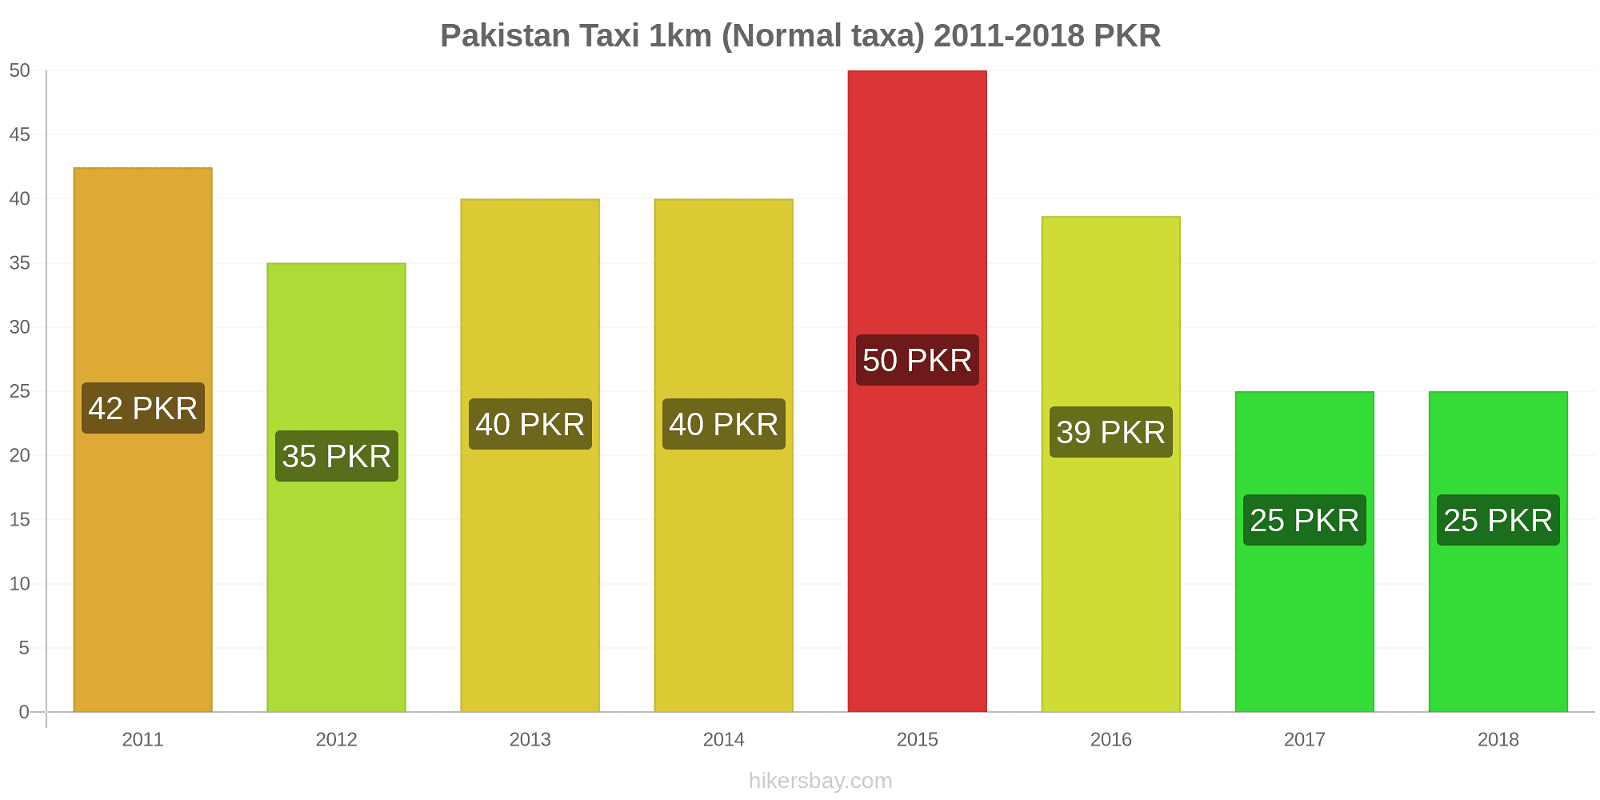 Pakistan prisändringar Taxi 1km (Normal taxa) hikersbay.com